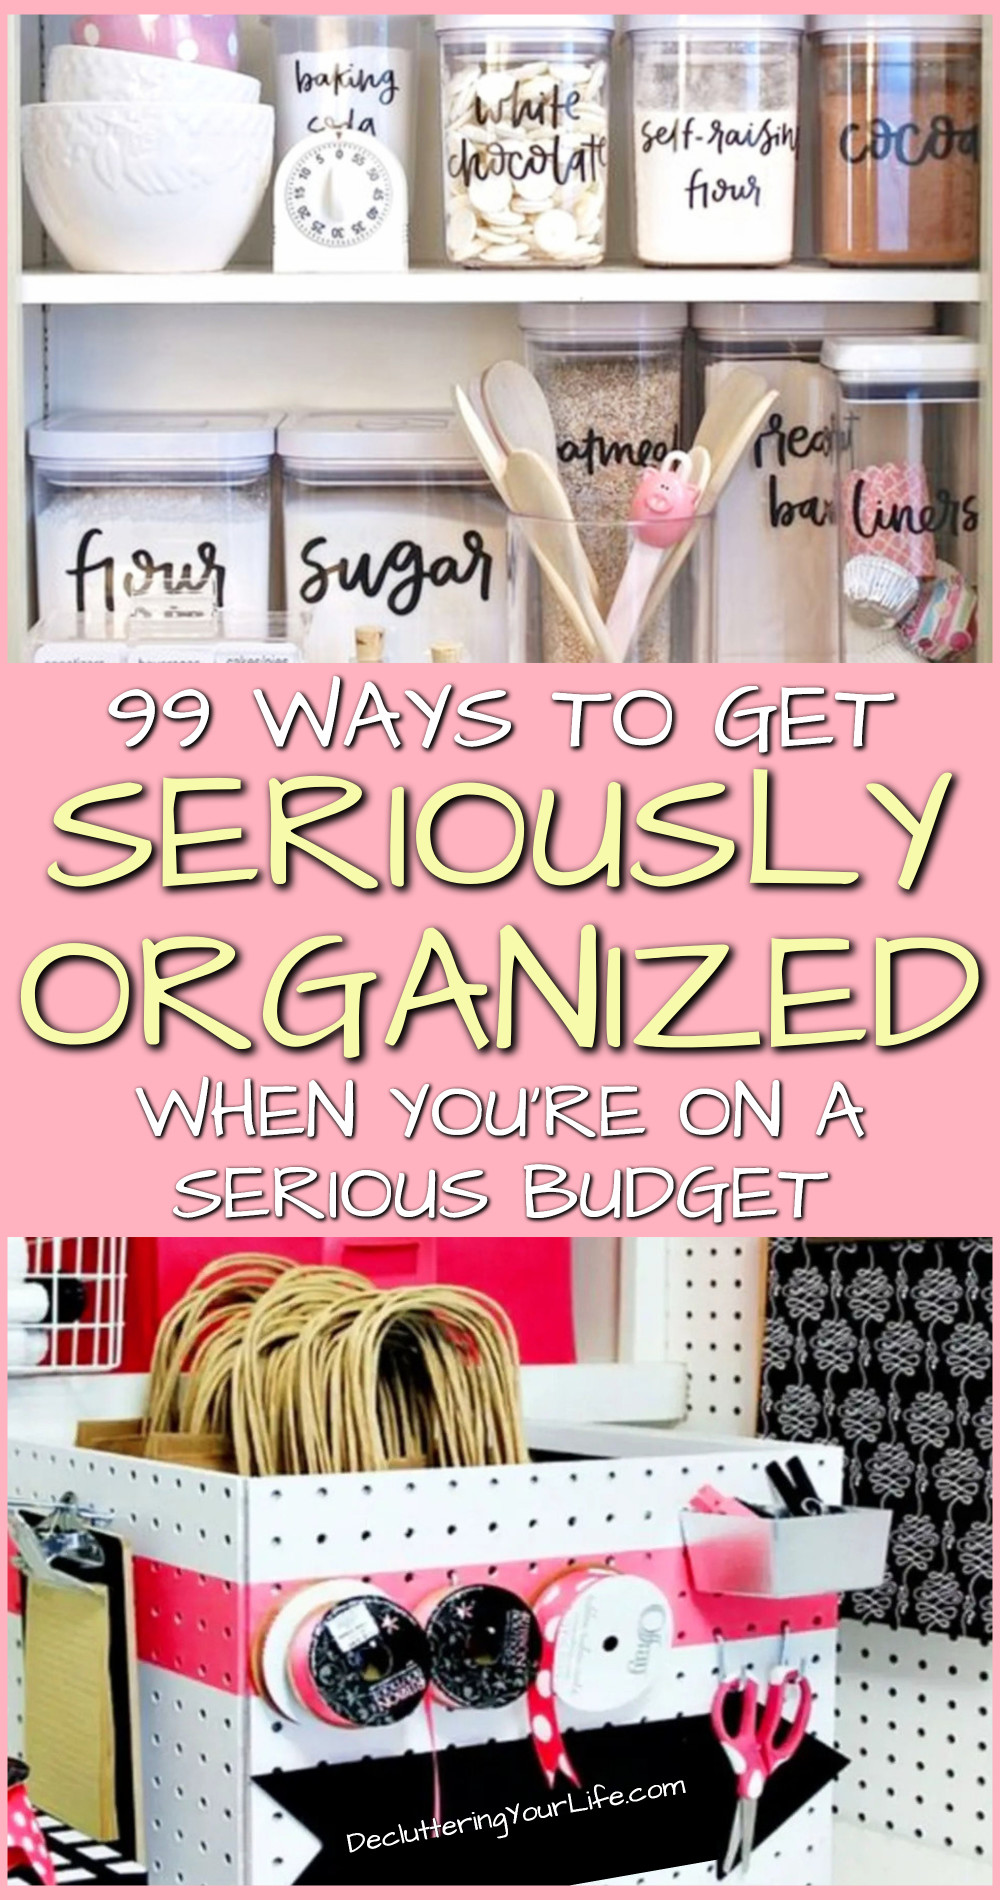 99 ways to get seriously organized